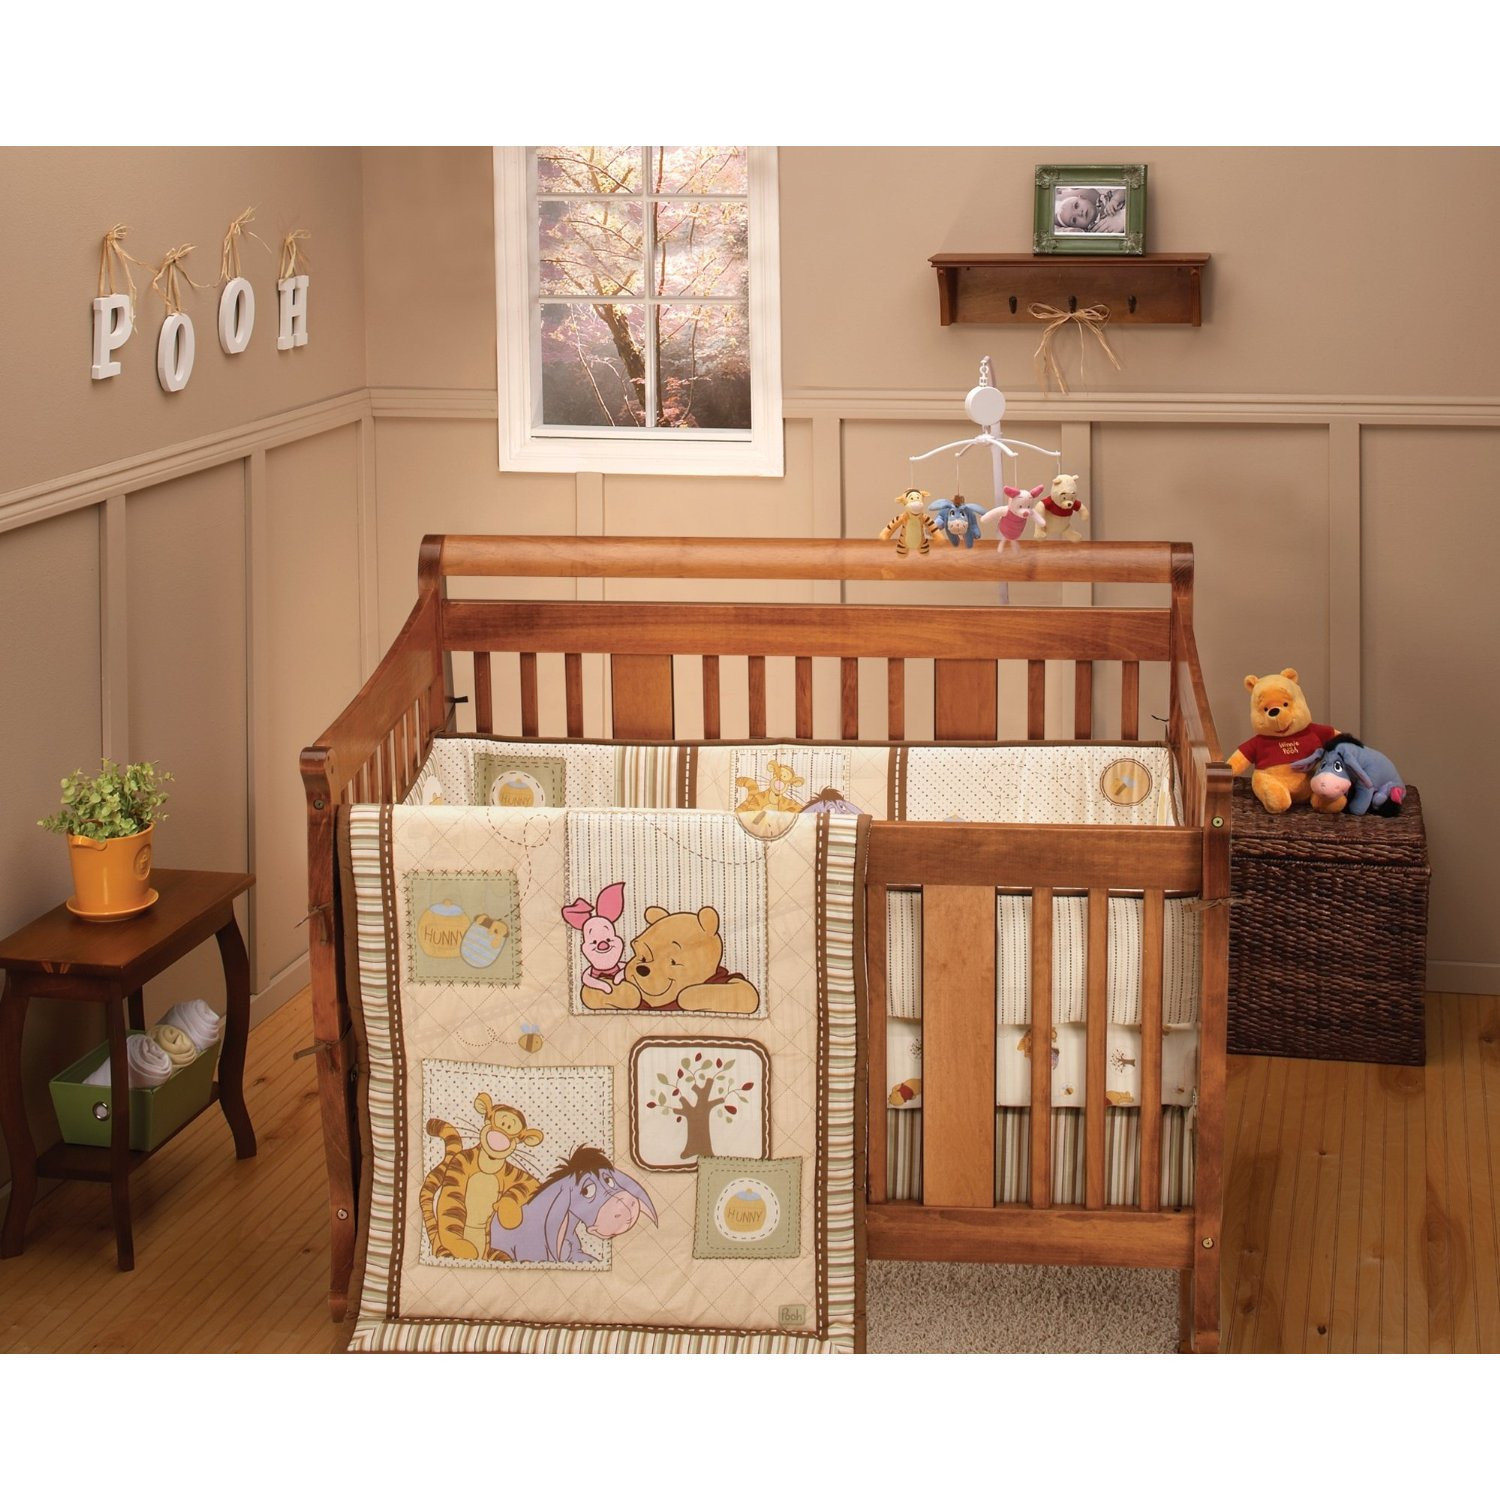 Winnie The Pooh Baby Decor
 Nursery Room Ideas Winnie The Pooh Crib Bedding Set